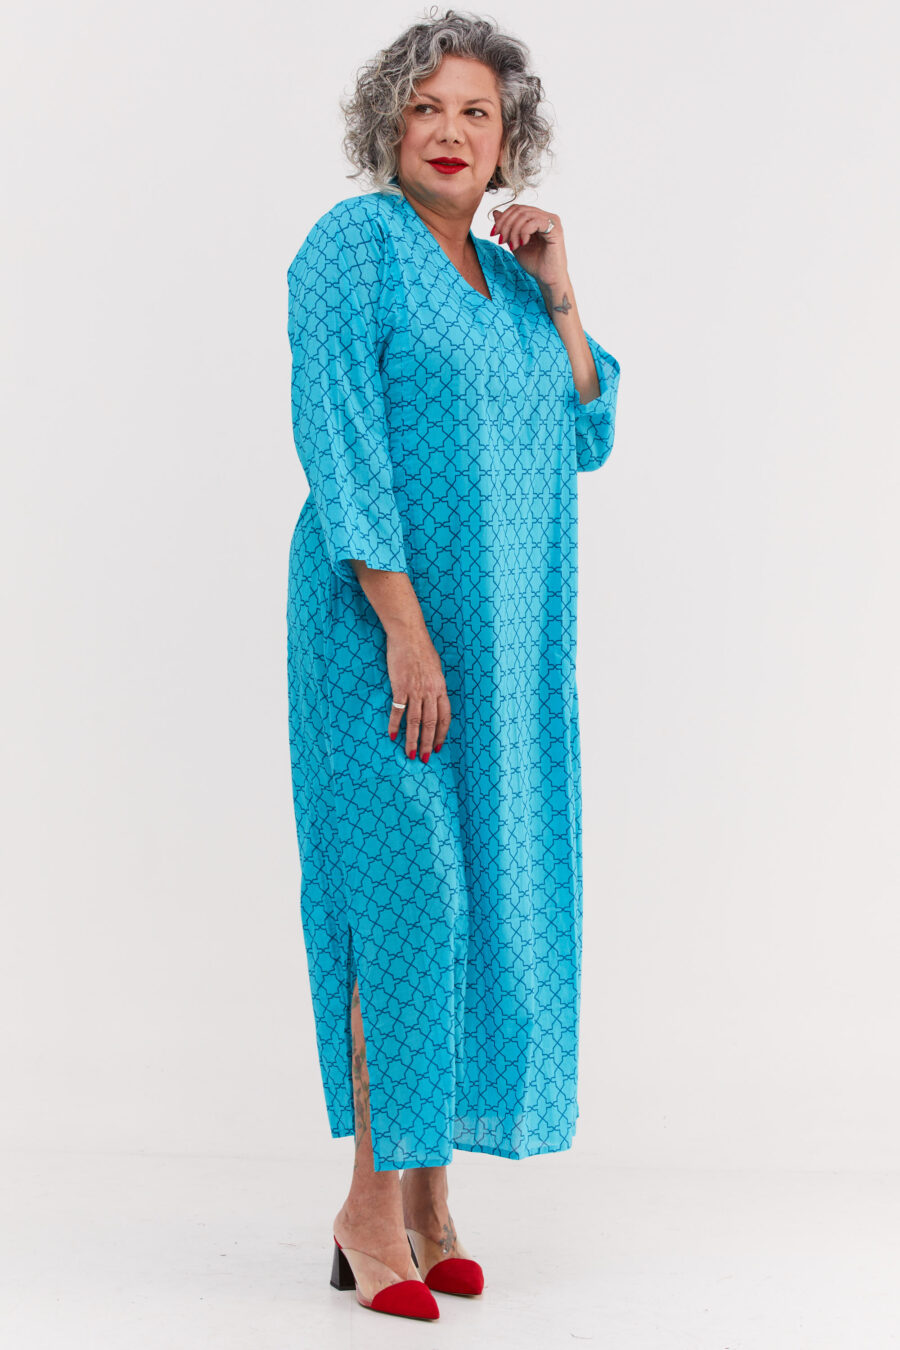 Jalabiya dress | Uniquely designed dress - tourqouise dress with dark blue geometric print by comfort zone boutique